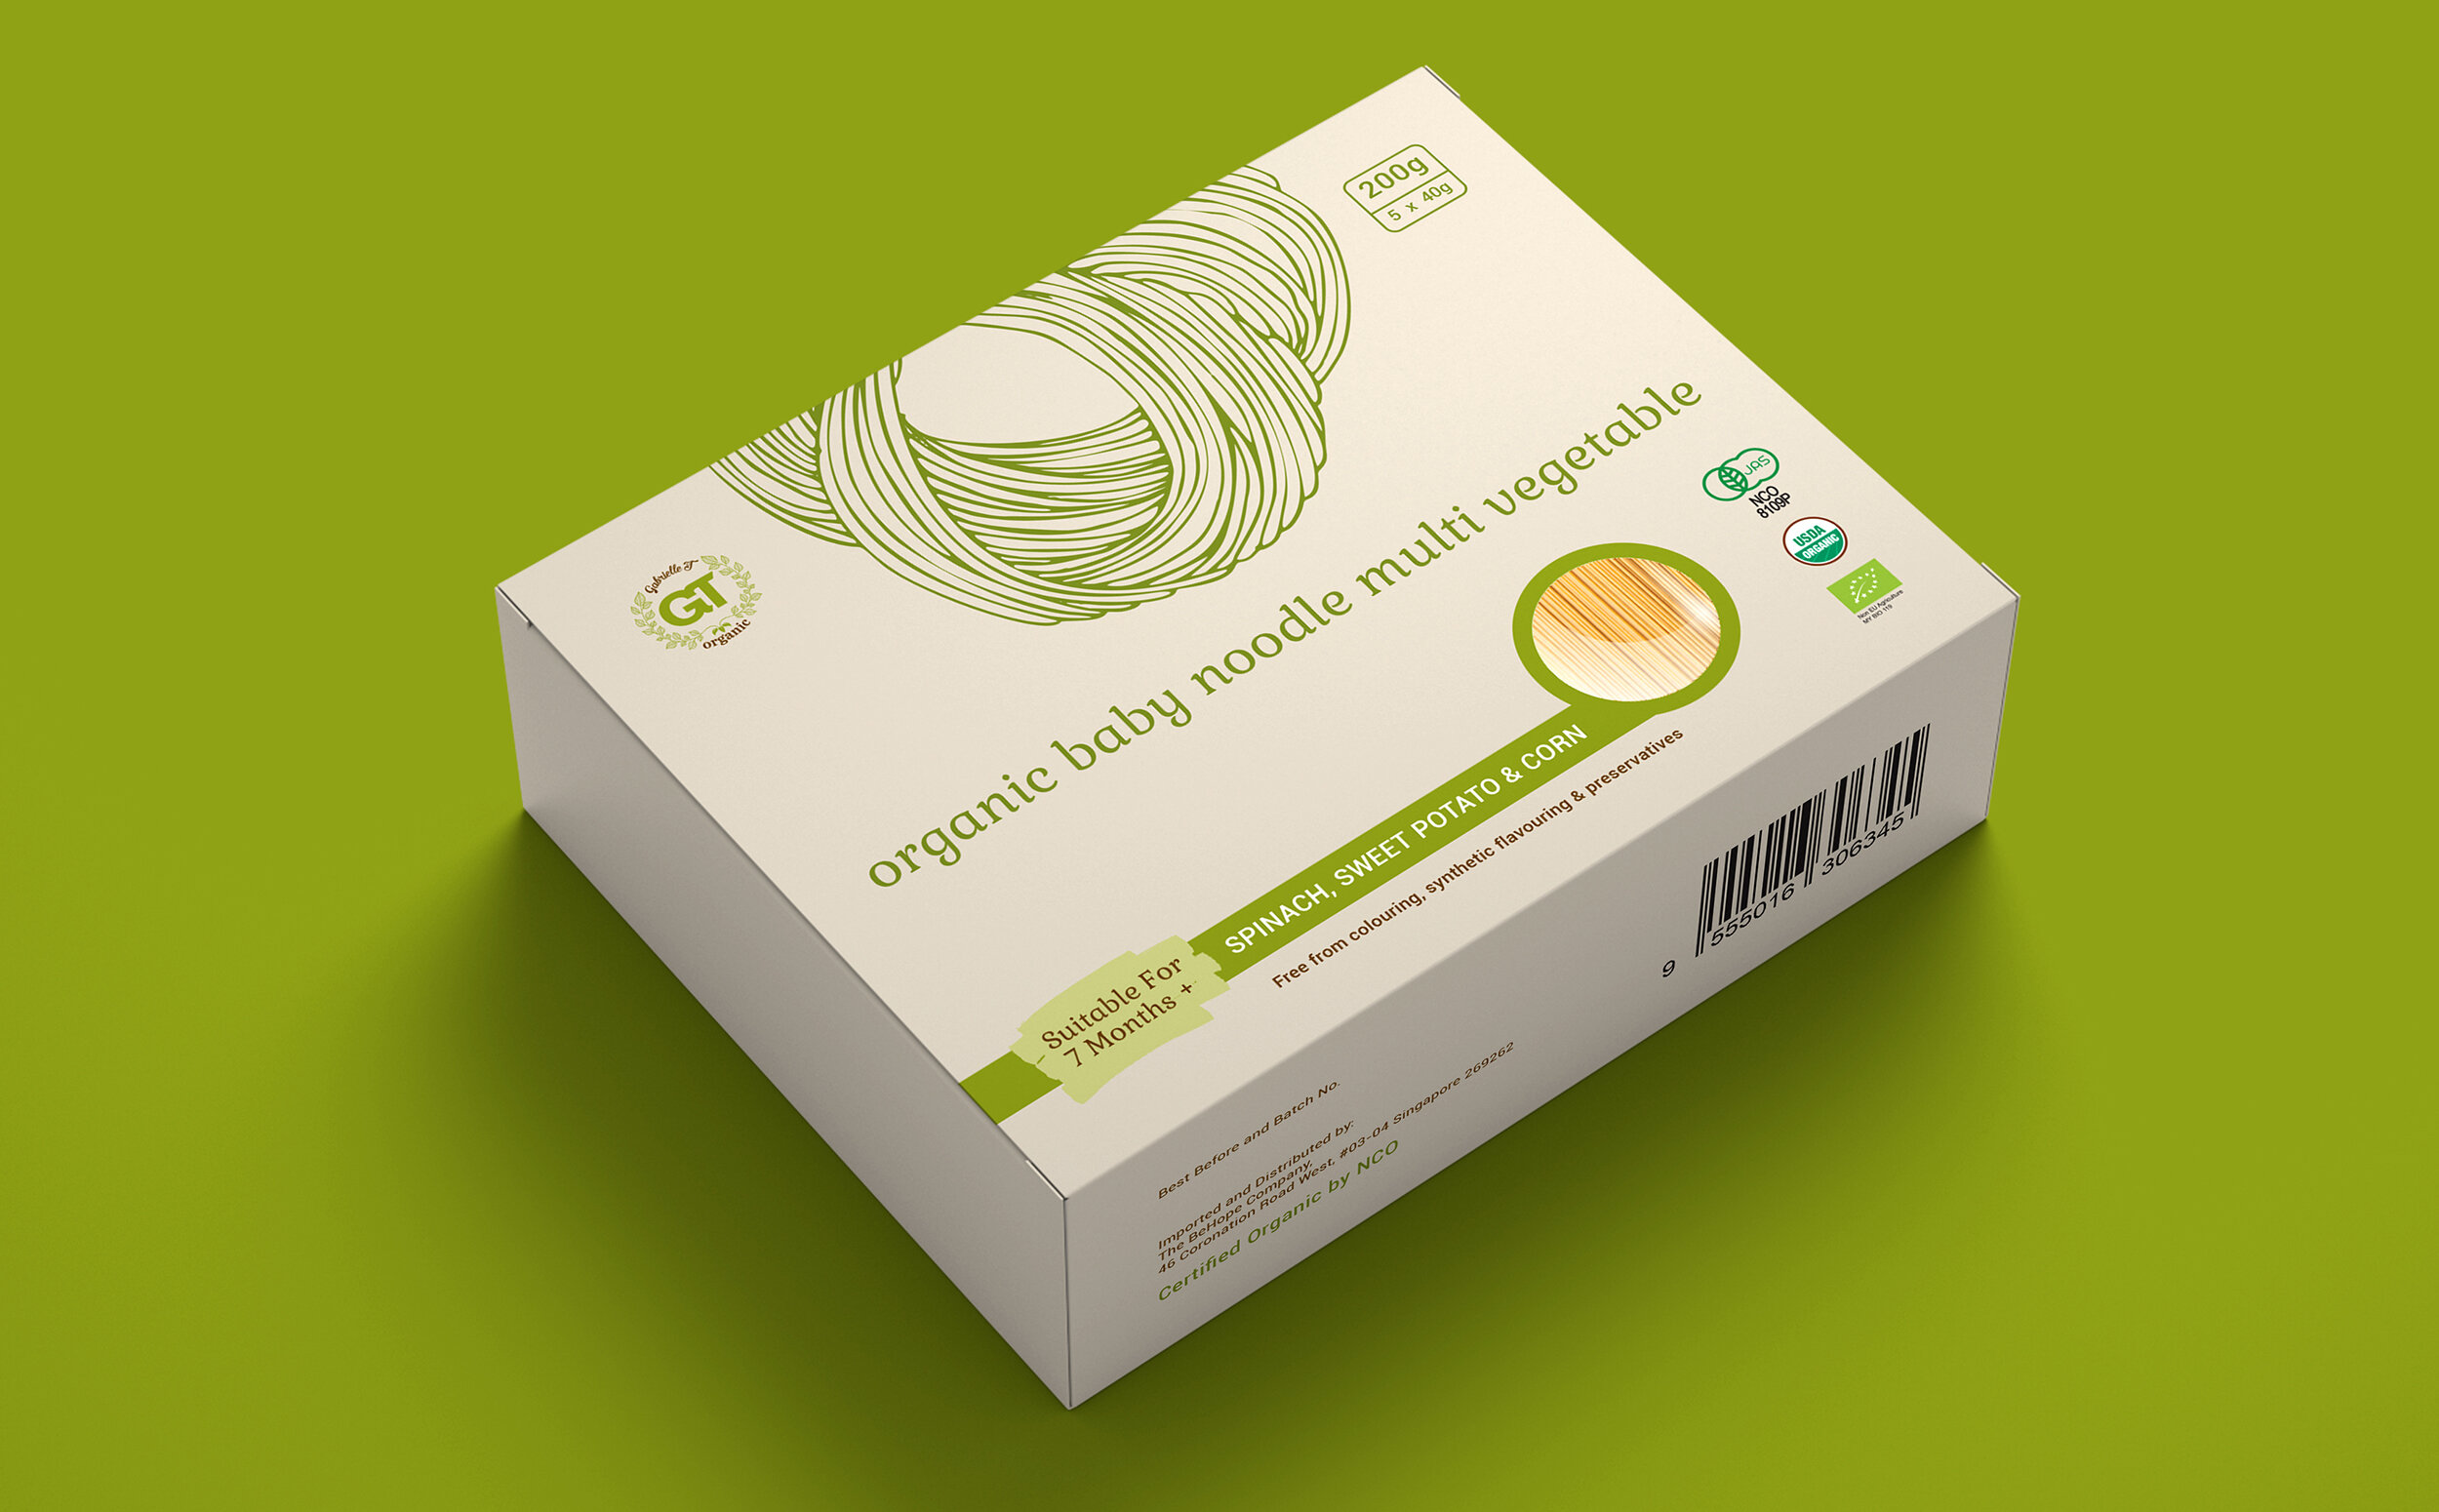 Gabrielle T Organic Baby Noodles Box 2 (Packaging Design by YANA Singapore Freelance Designer).jpg